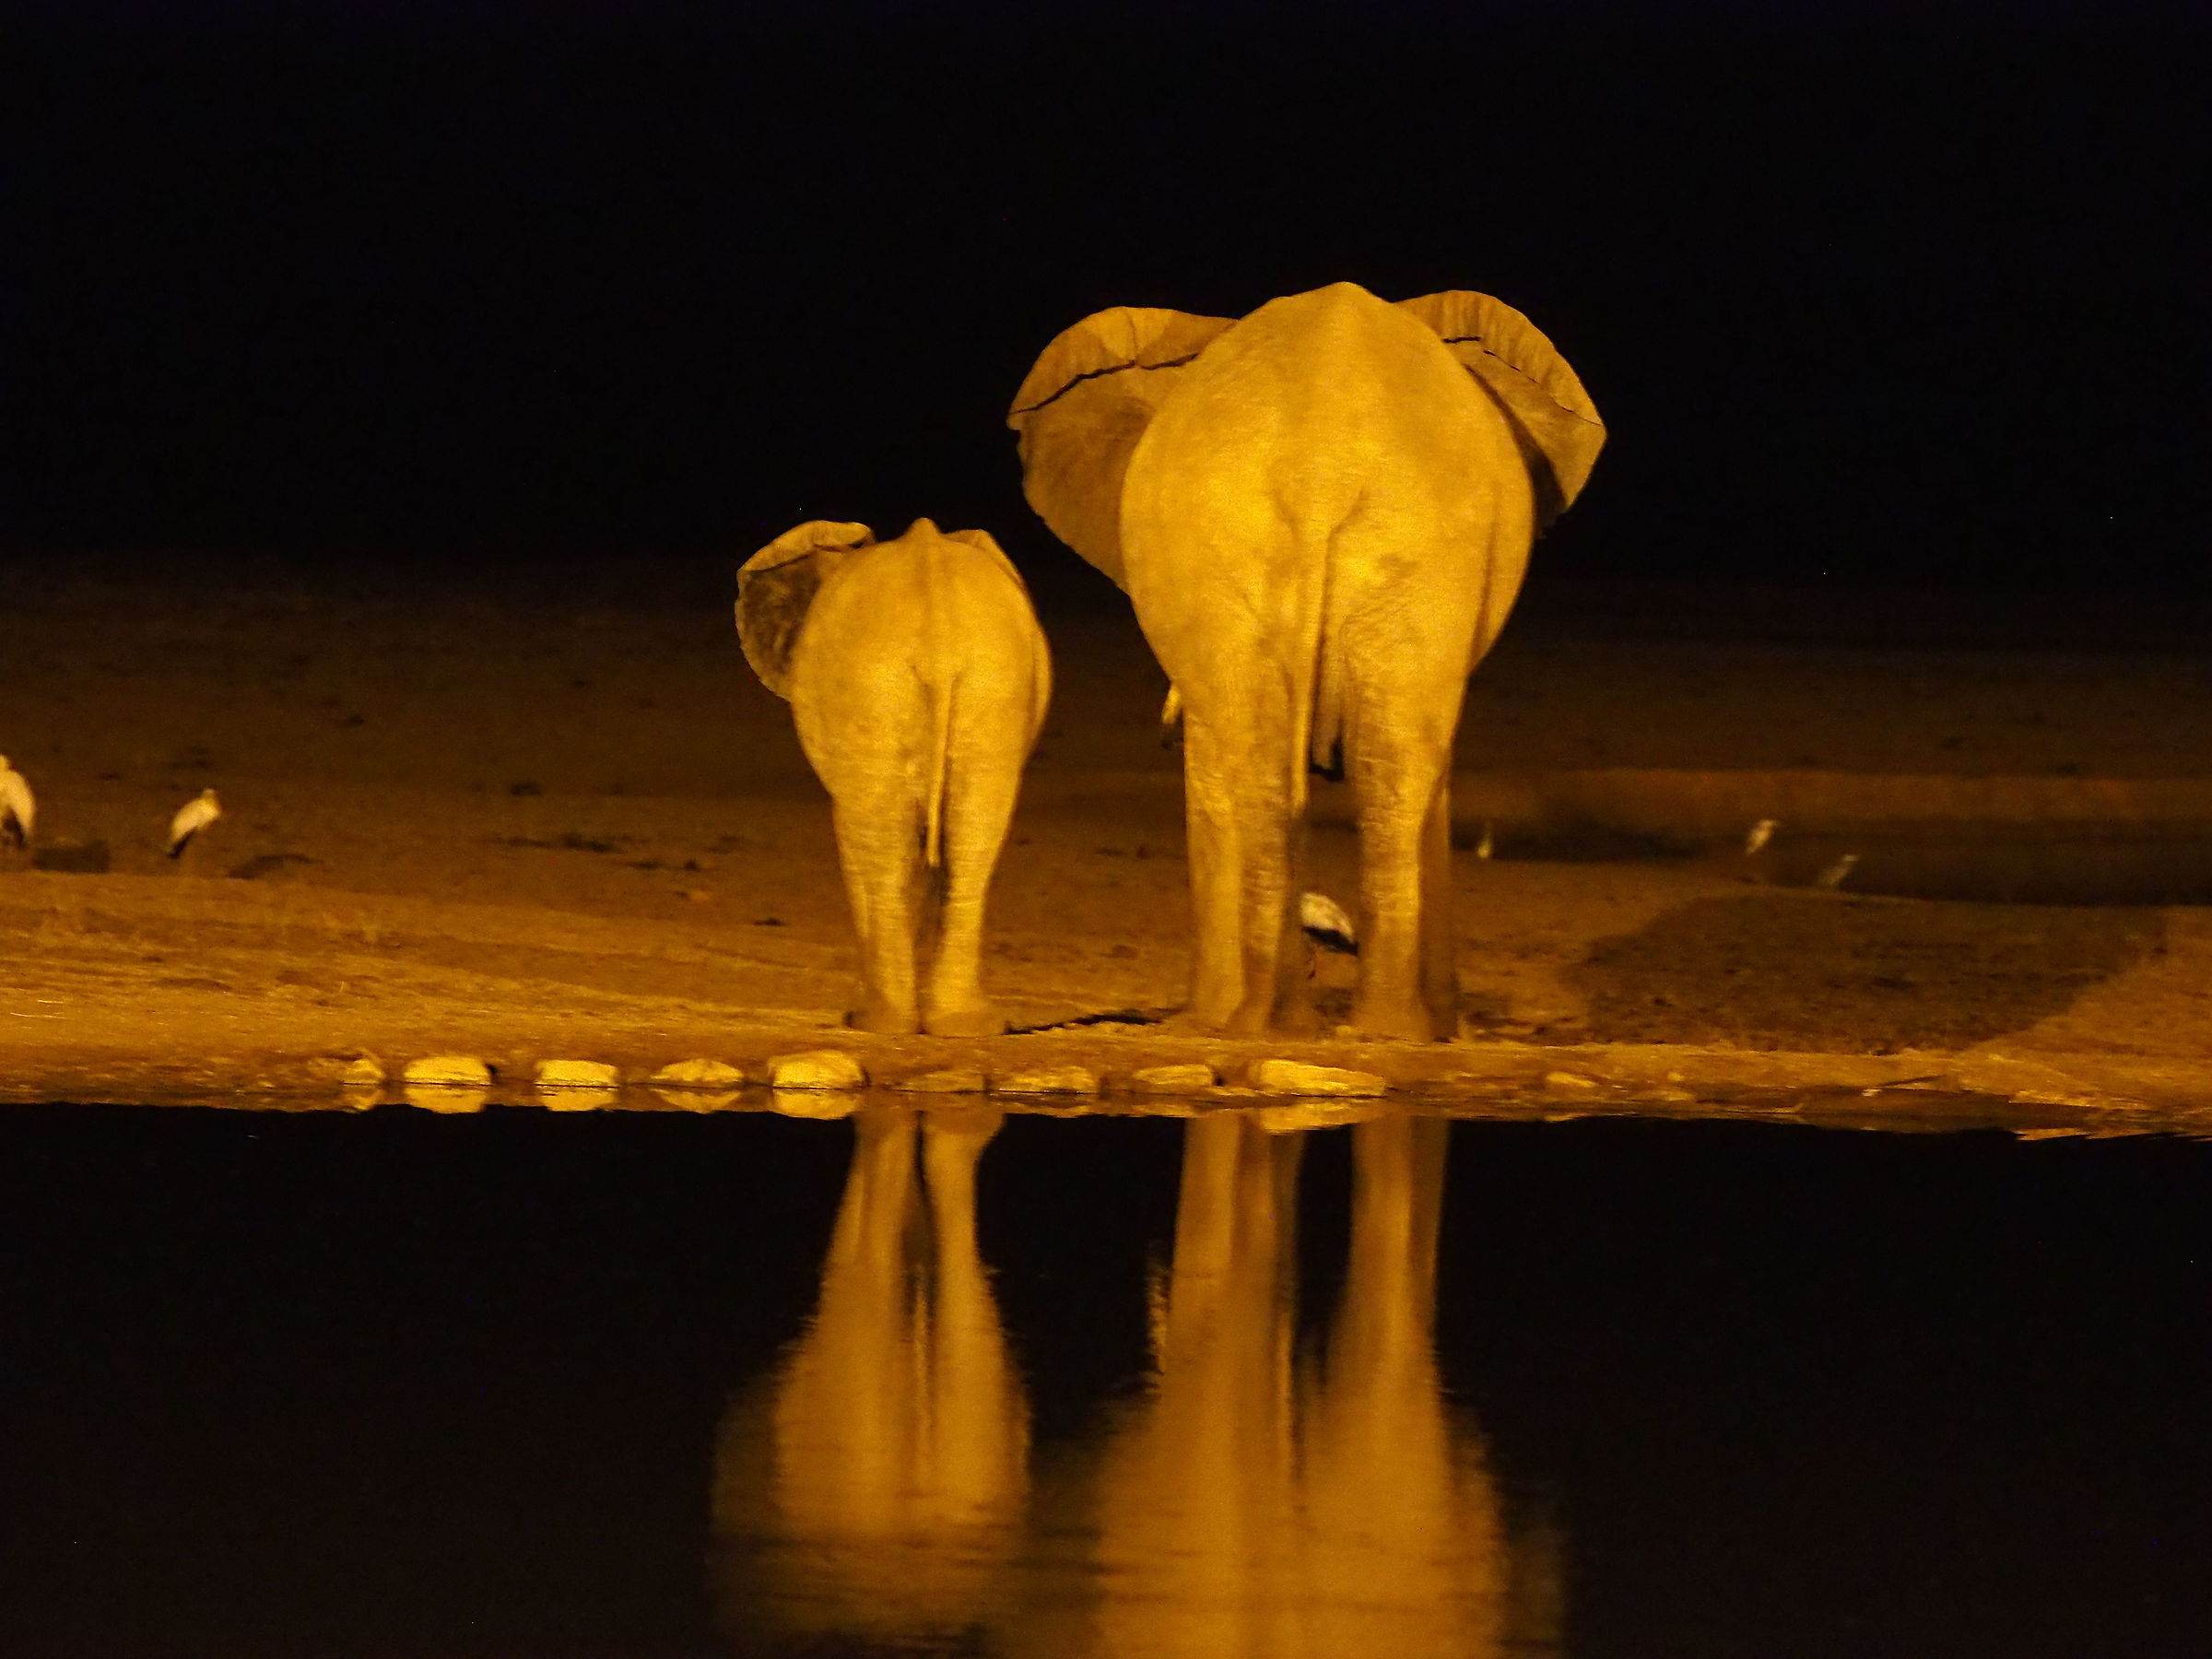 Nocturnal elephants...